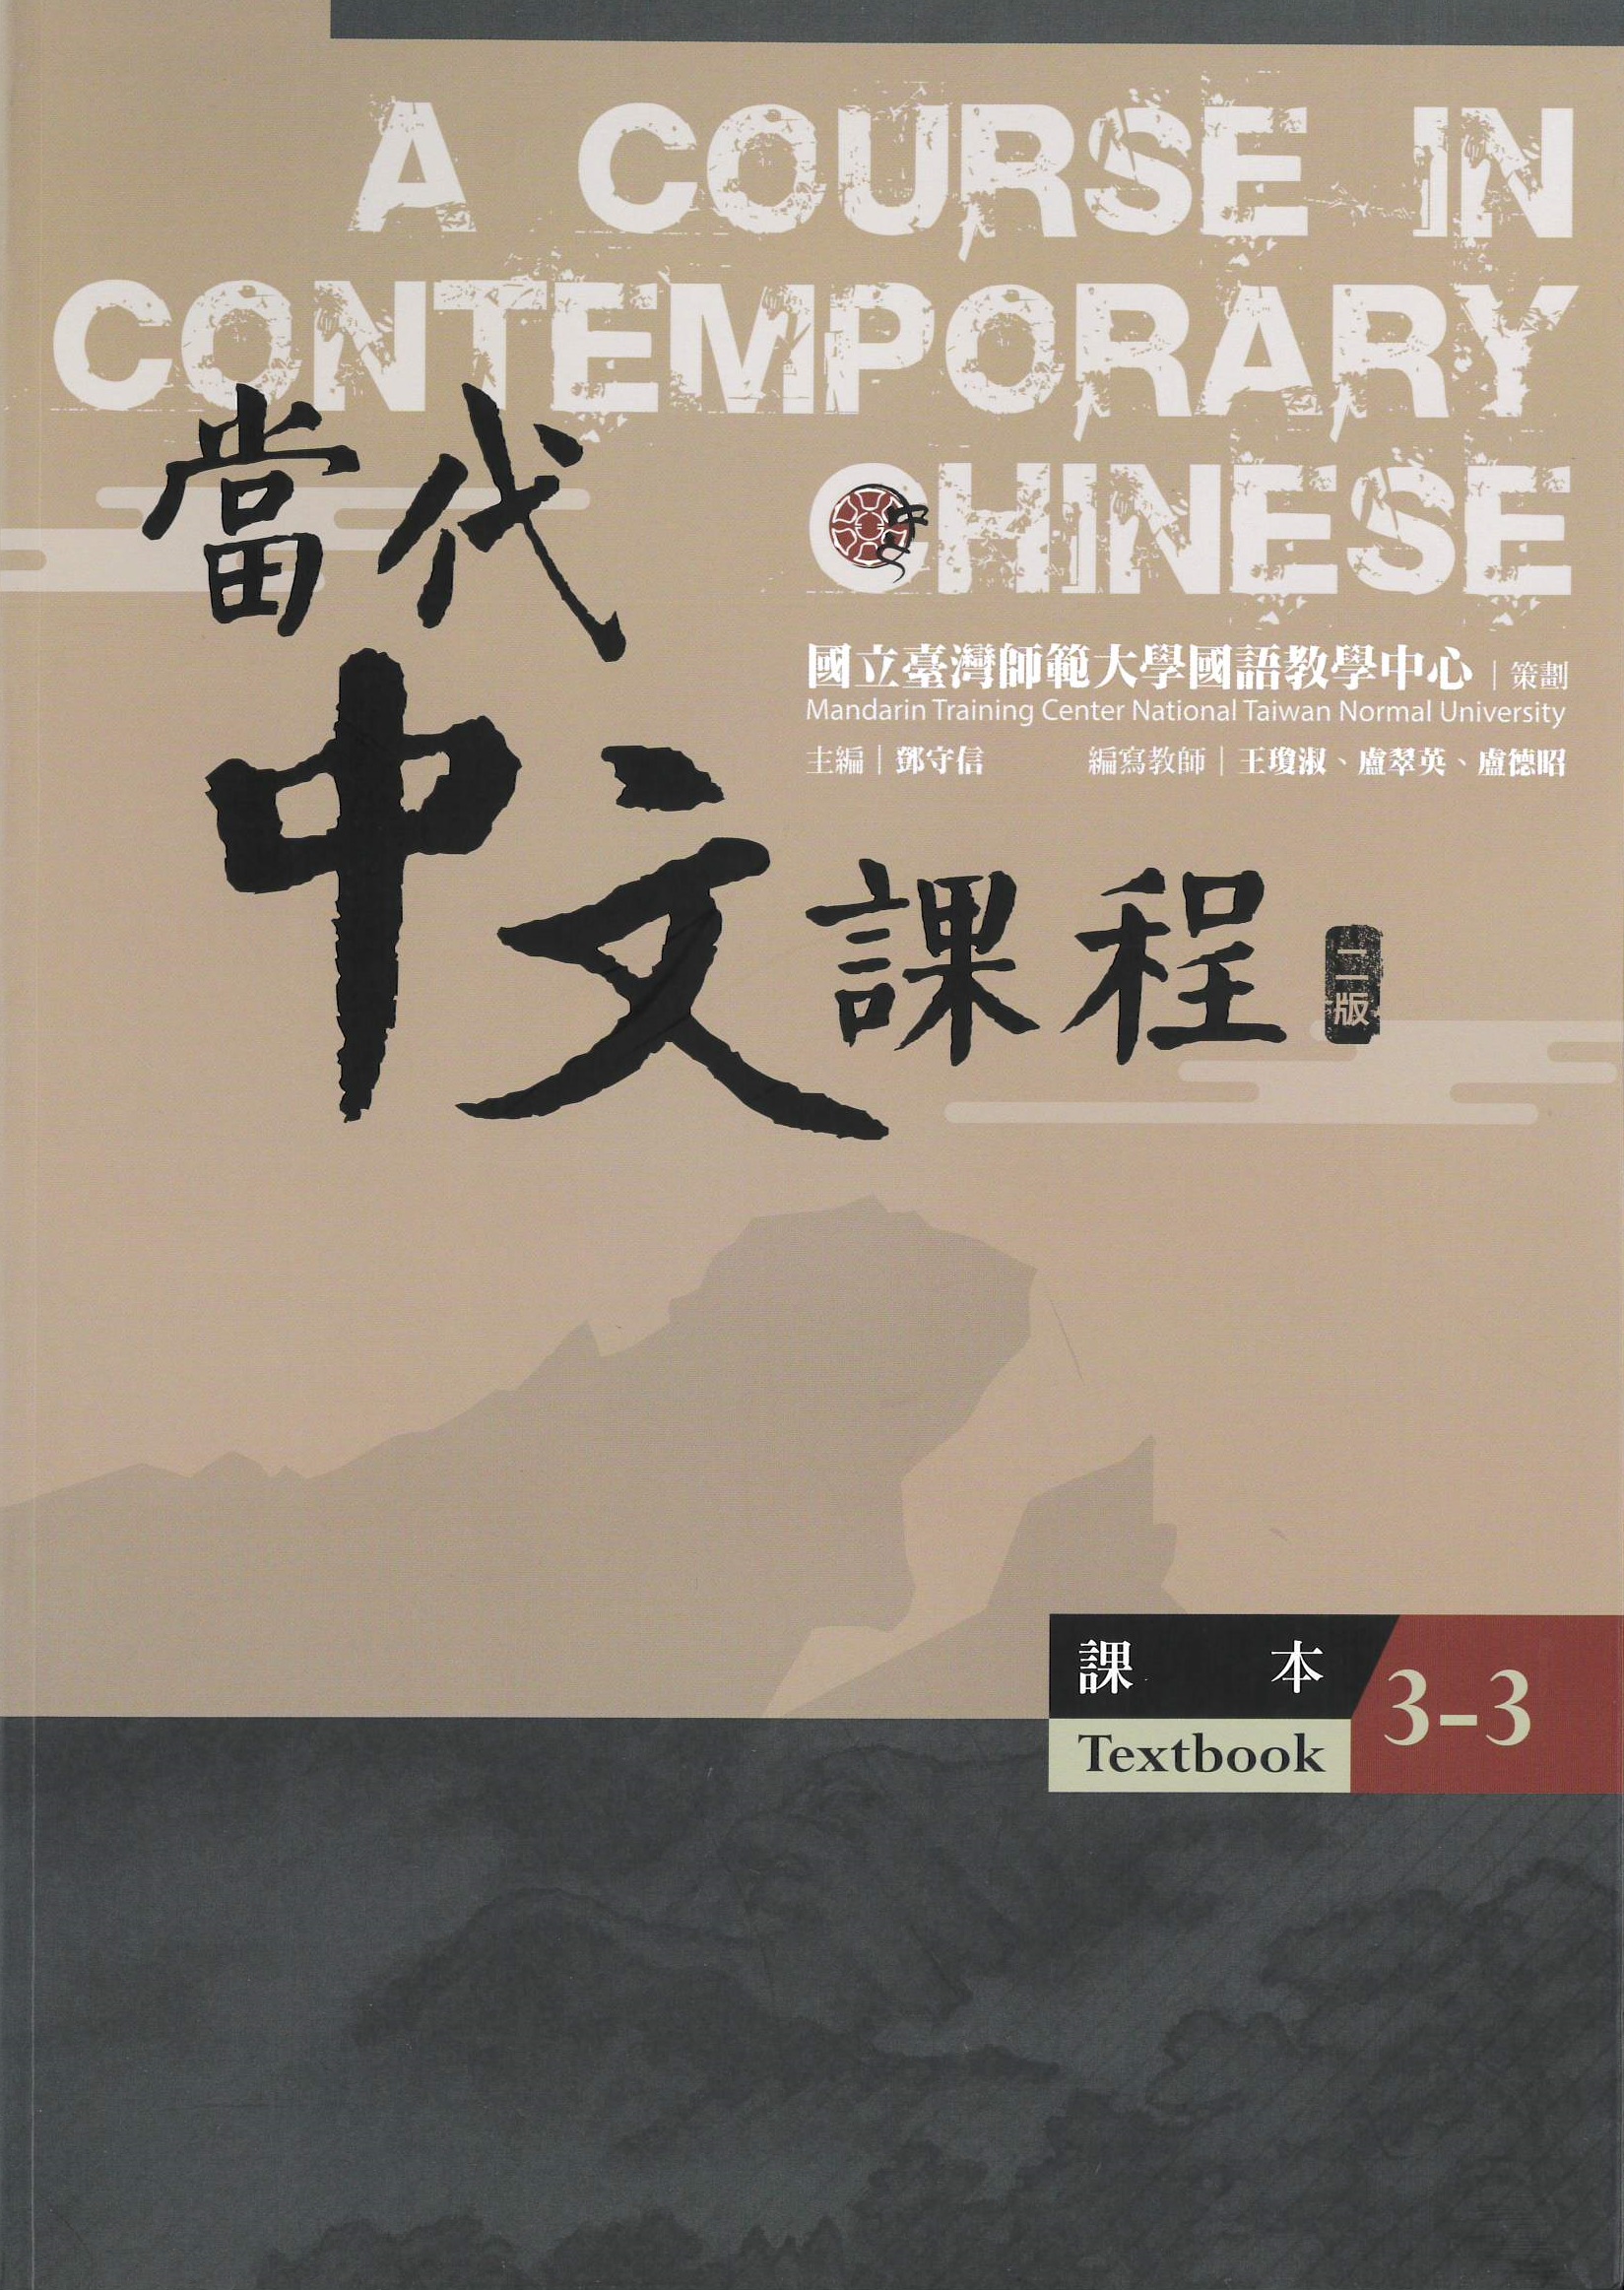 當代中文課程.二版(3-3) : 課本 = A Course in Contemporary Chinese 3-3, textbook